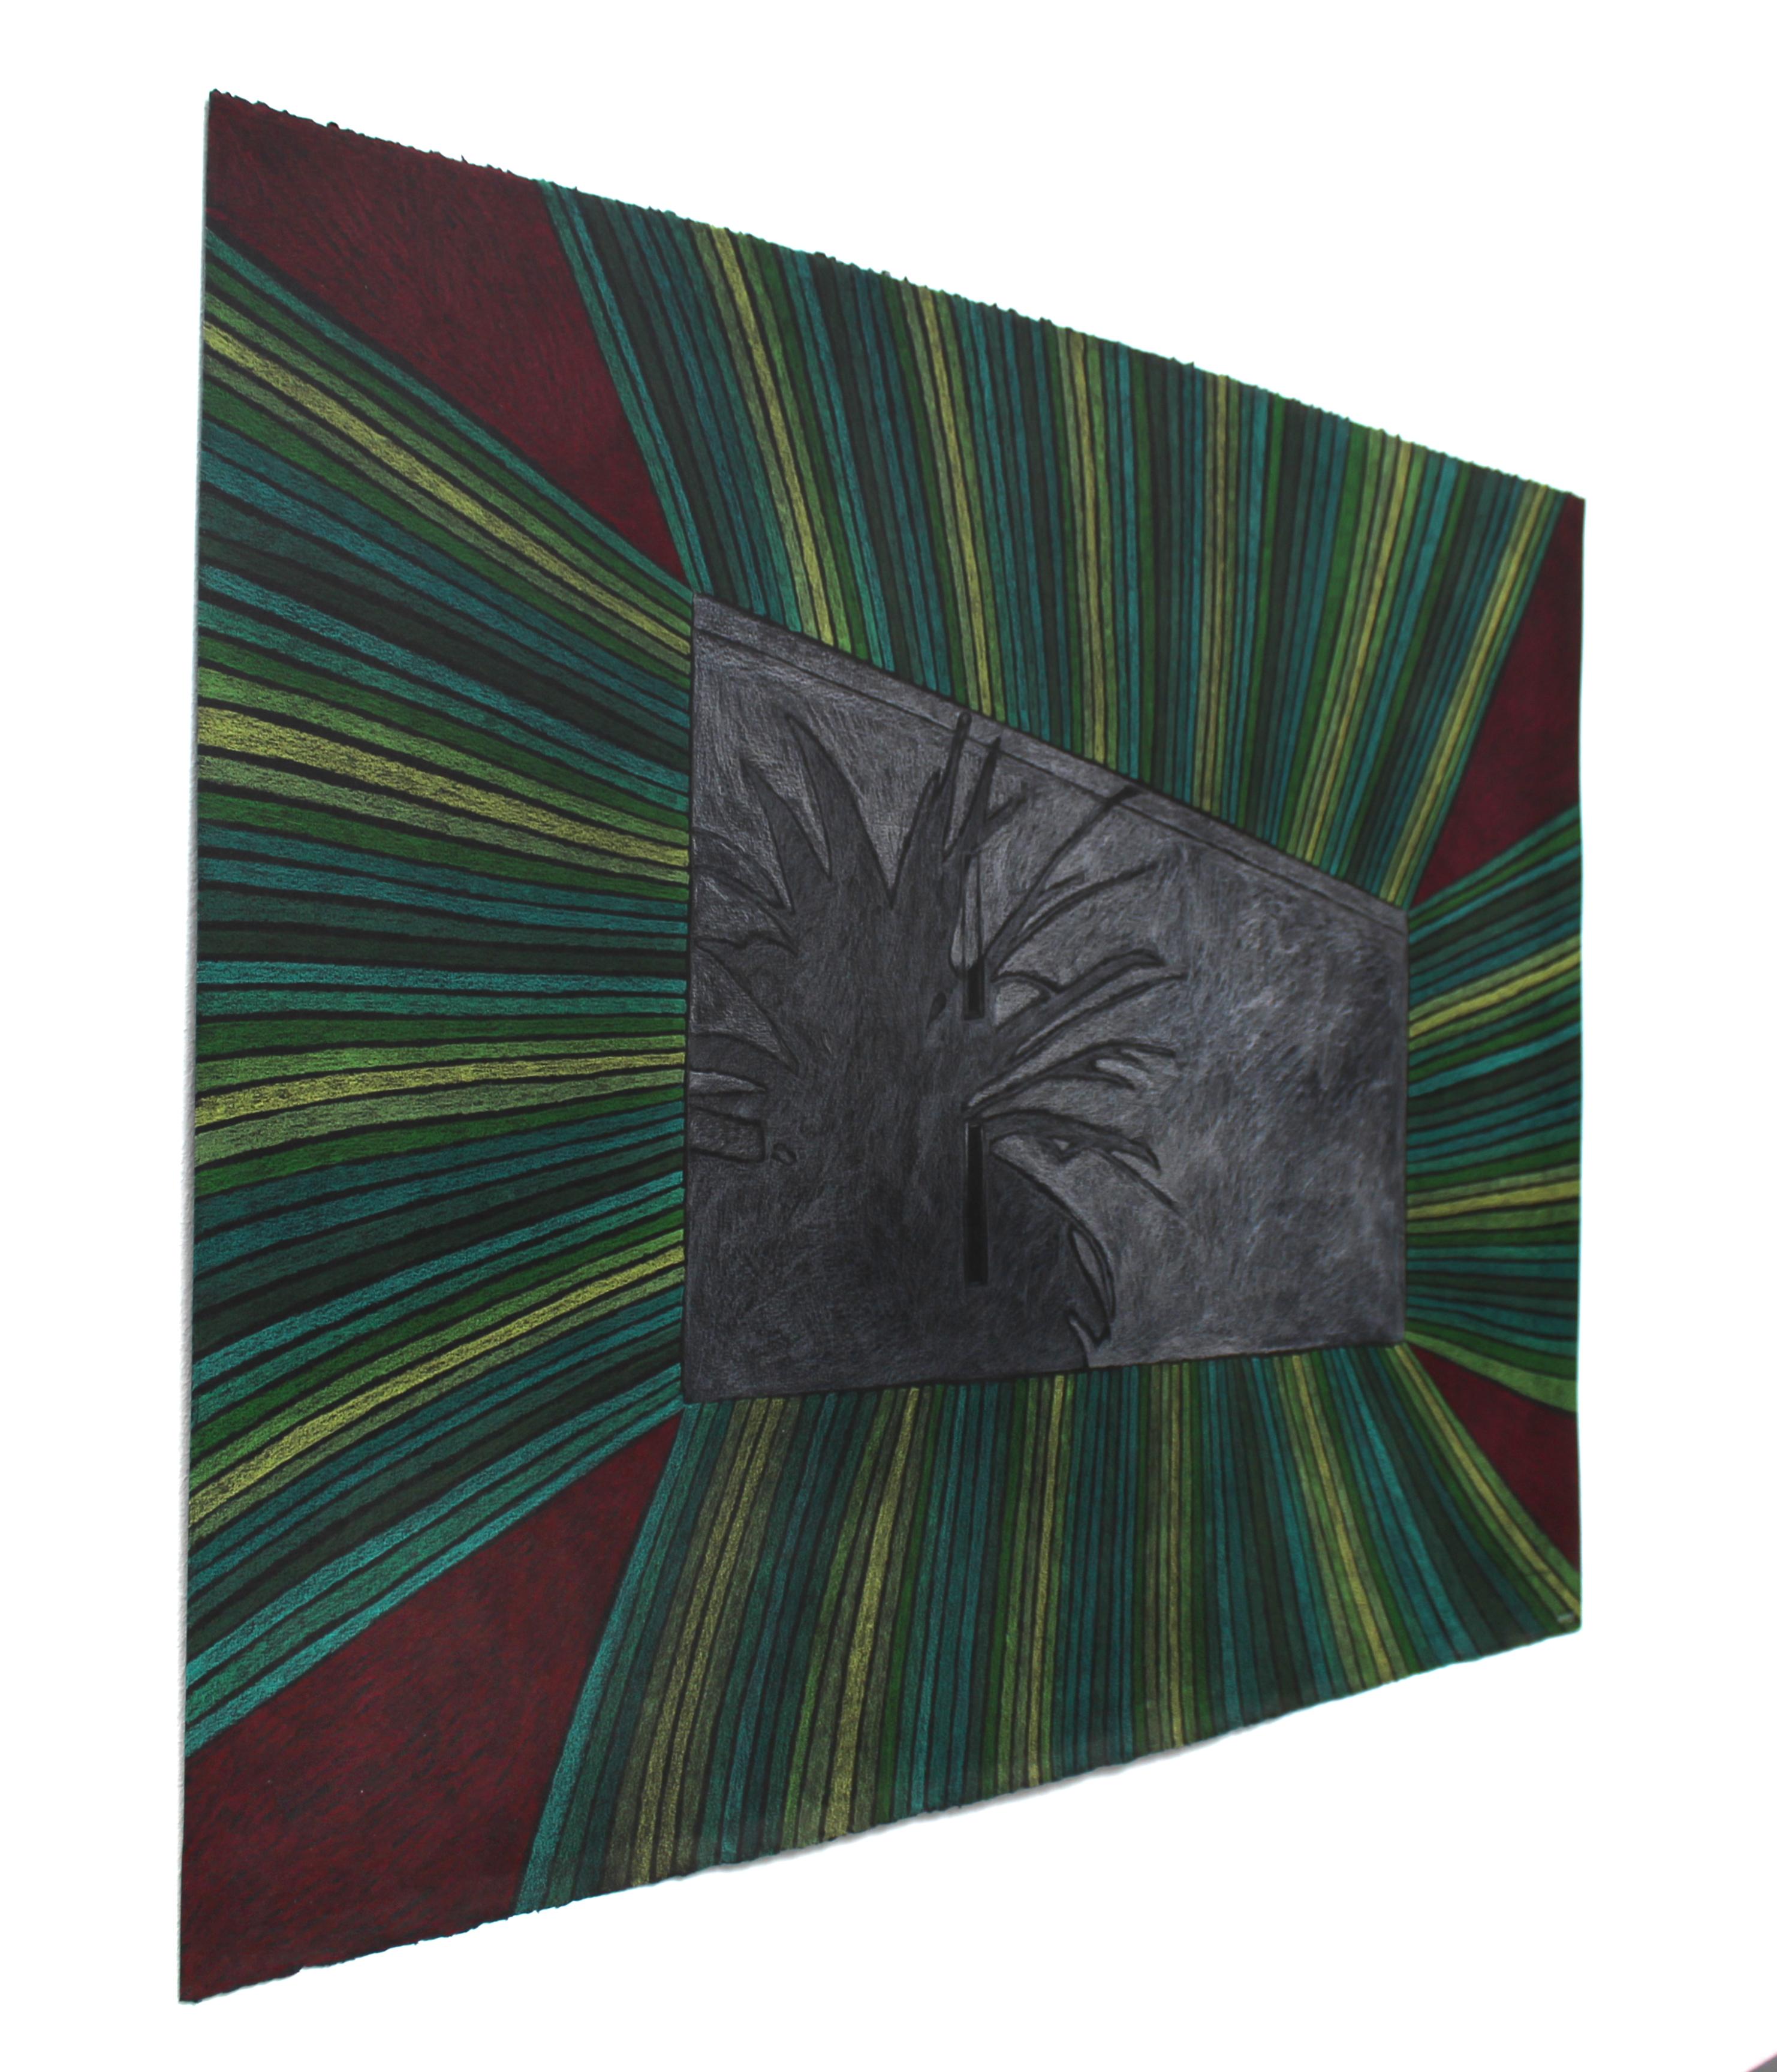 Single Quarters, Nicky Marais, Coloured pencil on black paper - Abstract Art by Nicky Marais 